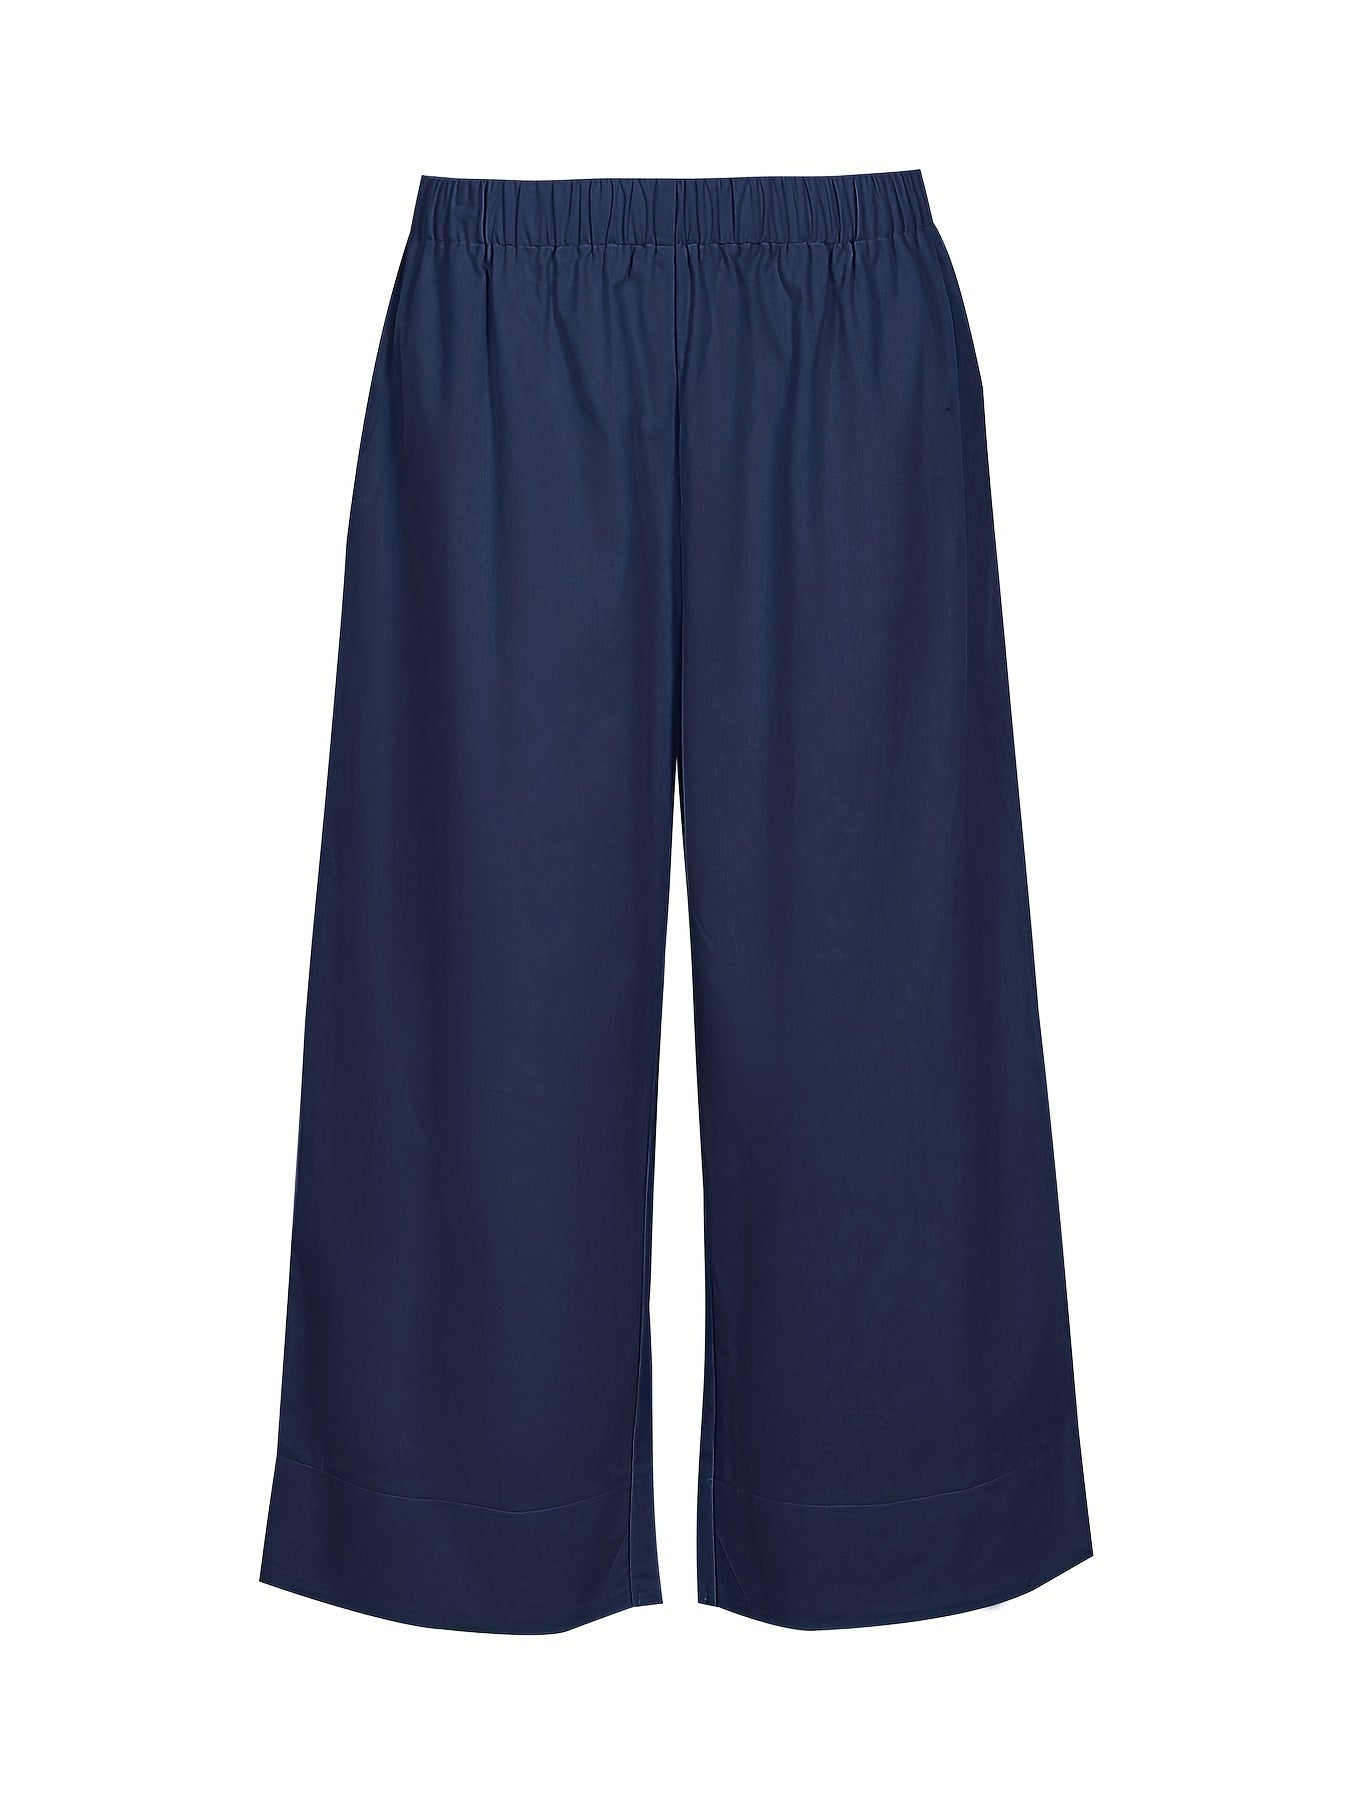 Plus Size Casual Capri Pants, Women's Plus Solid Straight Leg Summer Capri Pants